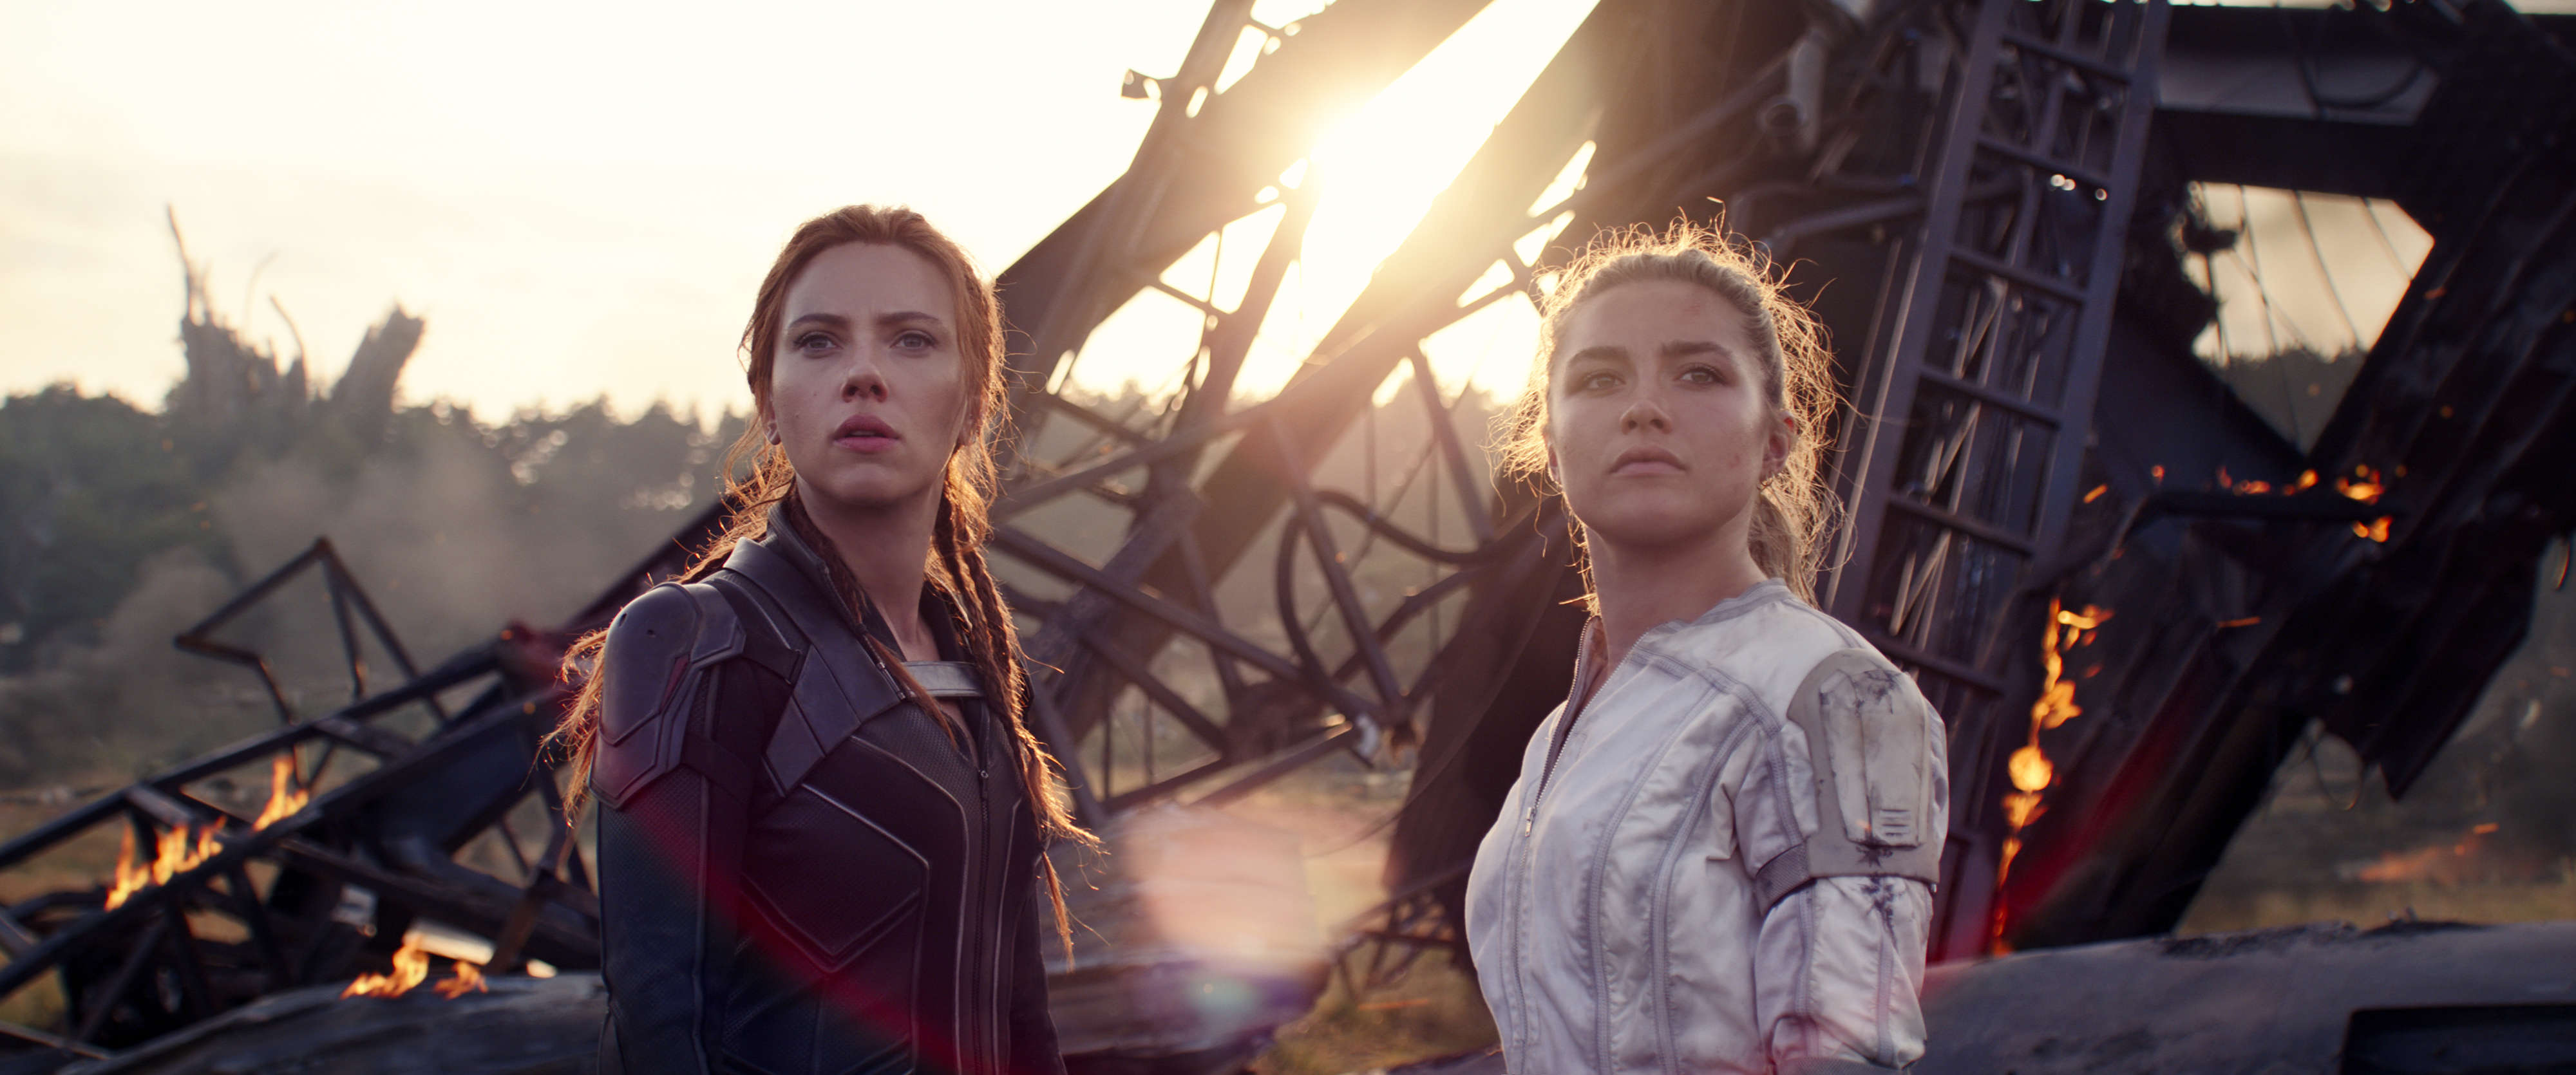 Natasha Romanoff/Black Widow (Scarlett Johansson) left and Yelena Belova (Florence Pugh) right in Marvel's "Black Widow" (2021)